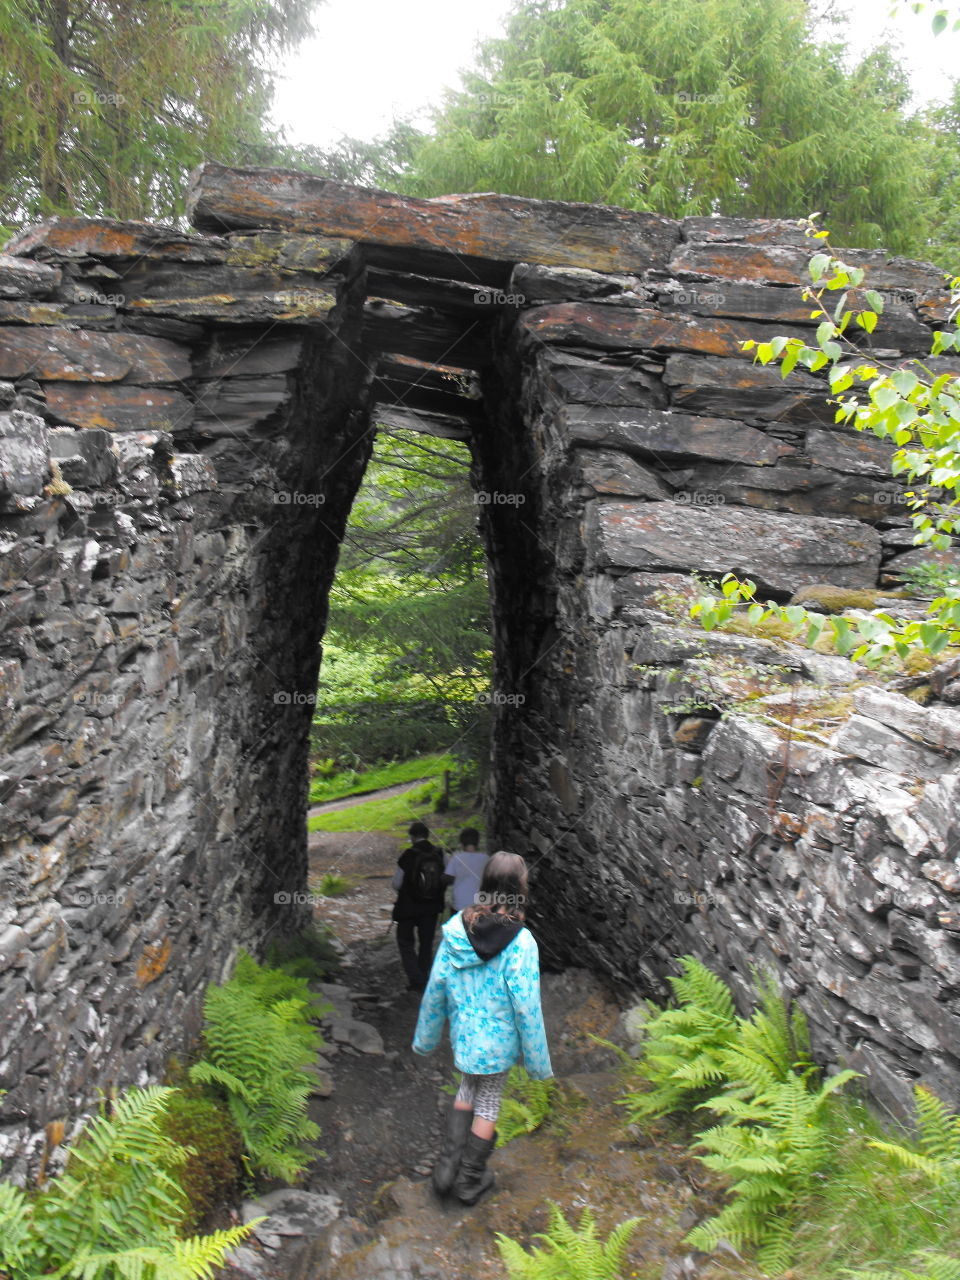 A stone tunnel